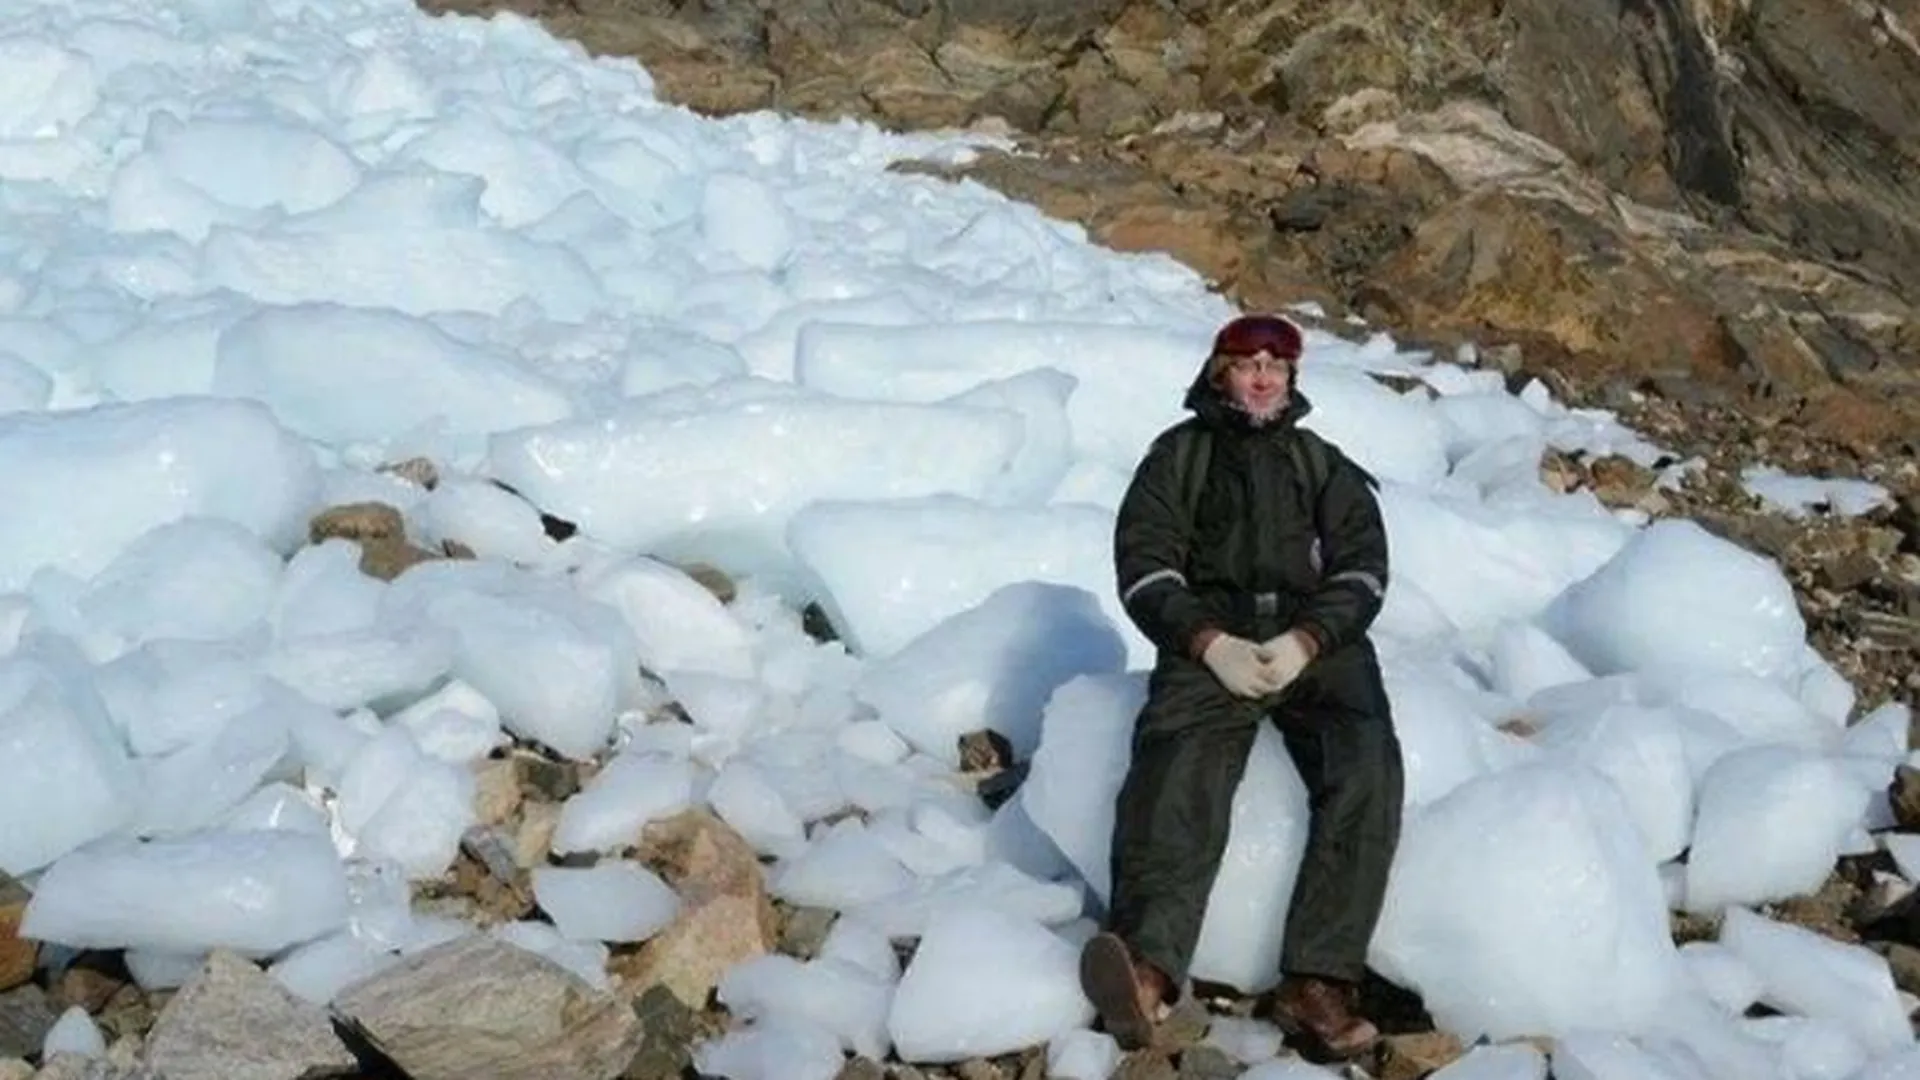 Пущинский ученый написал книгу о жизни и работе почвоведа в Антарктиде